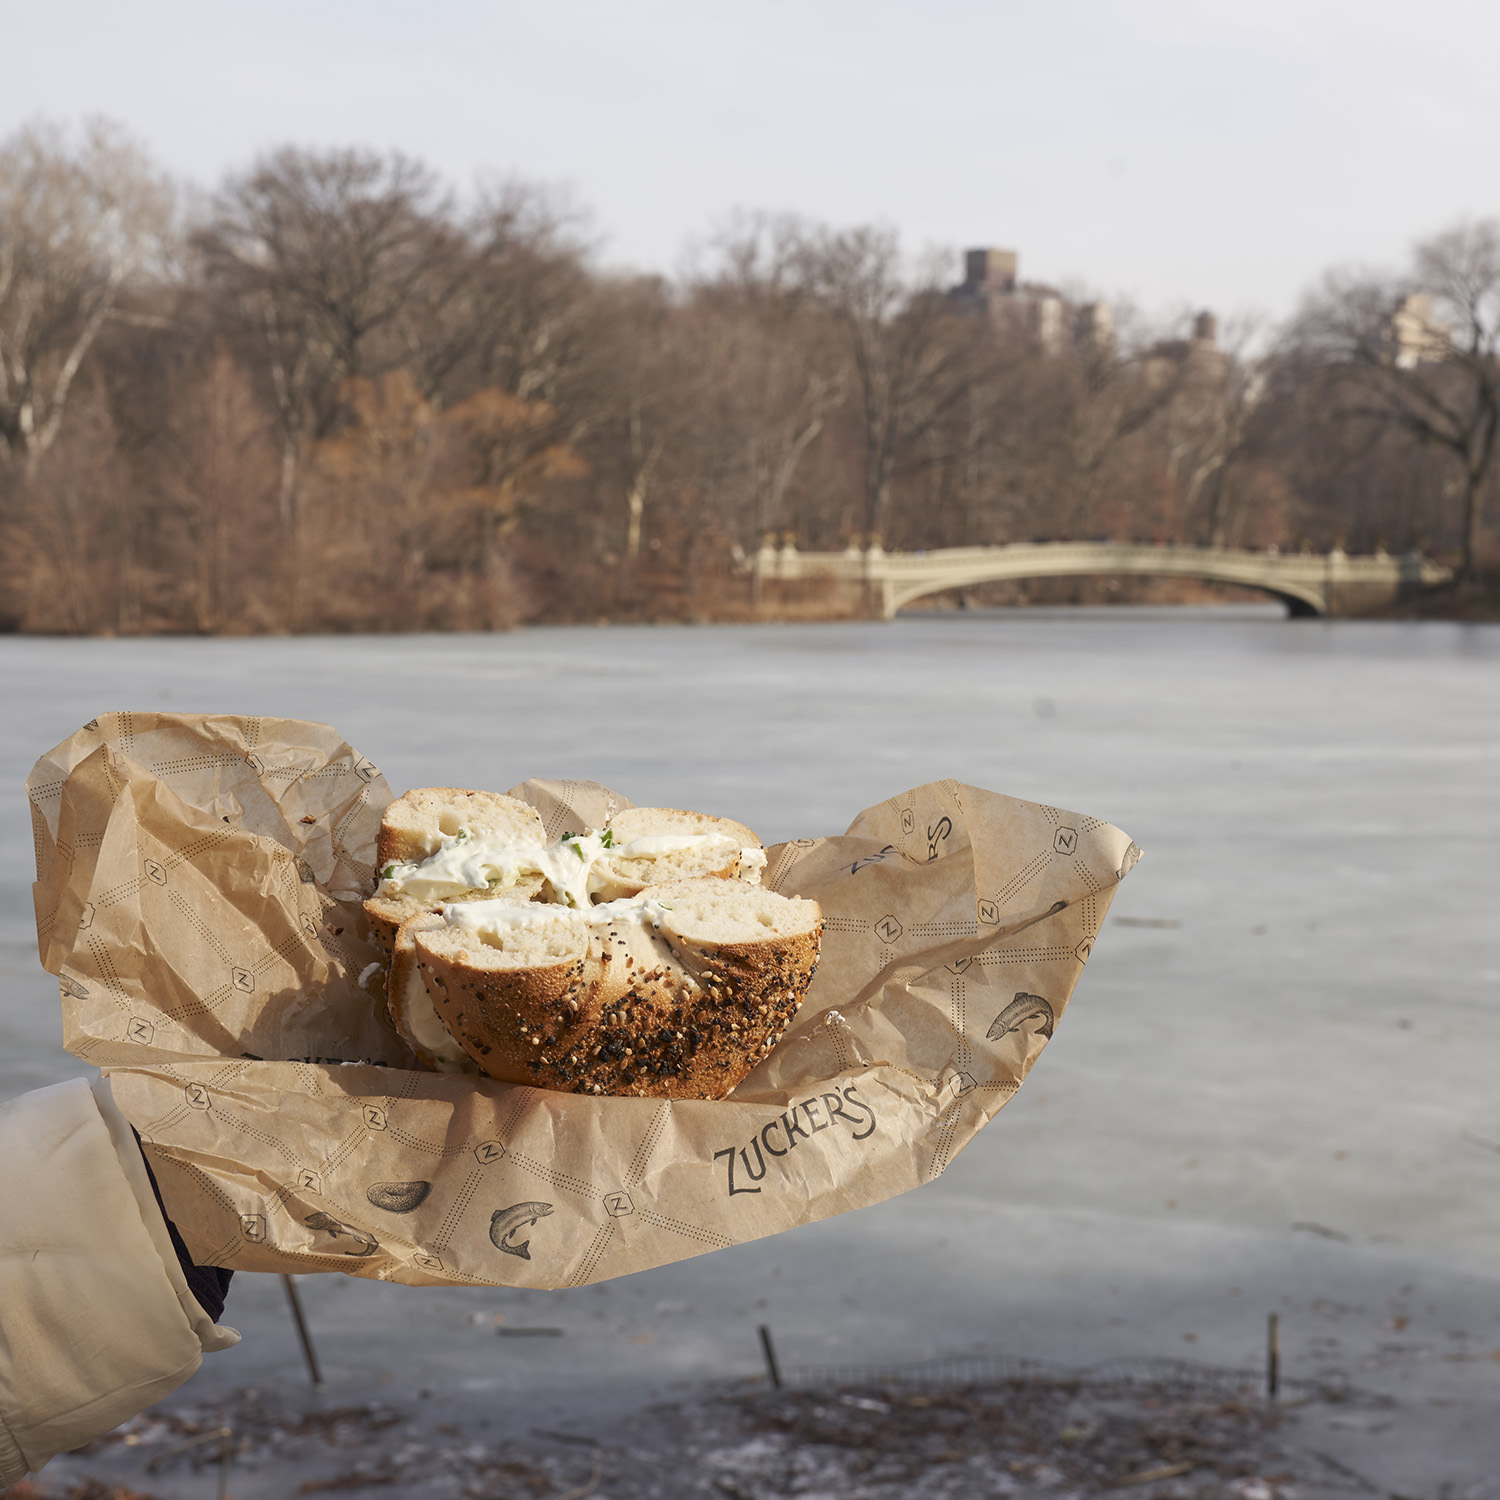 Zucker's Bagel In Central Park Before Shot